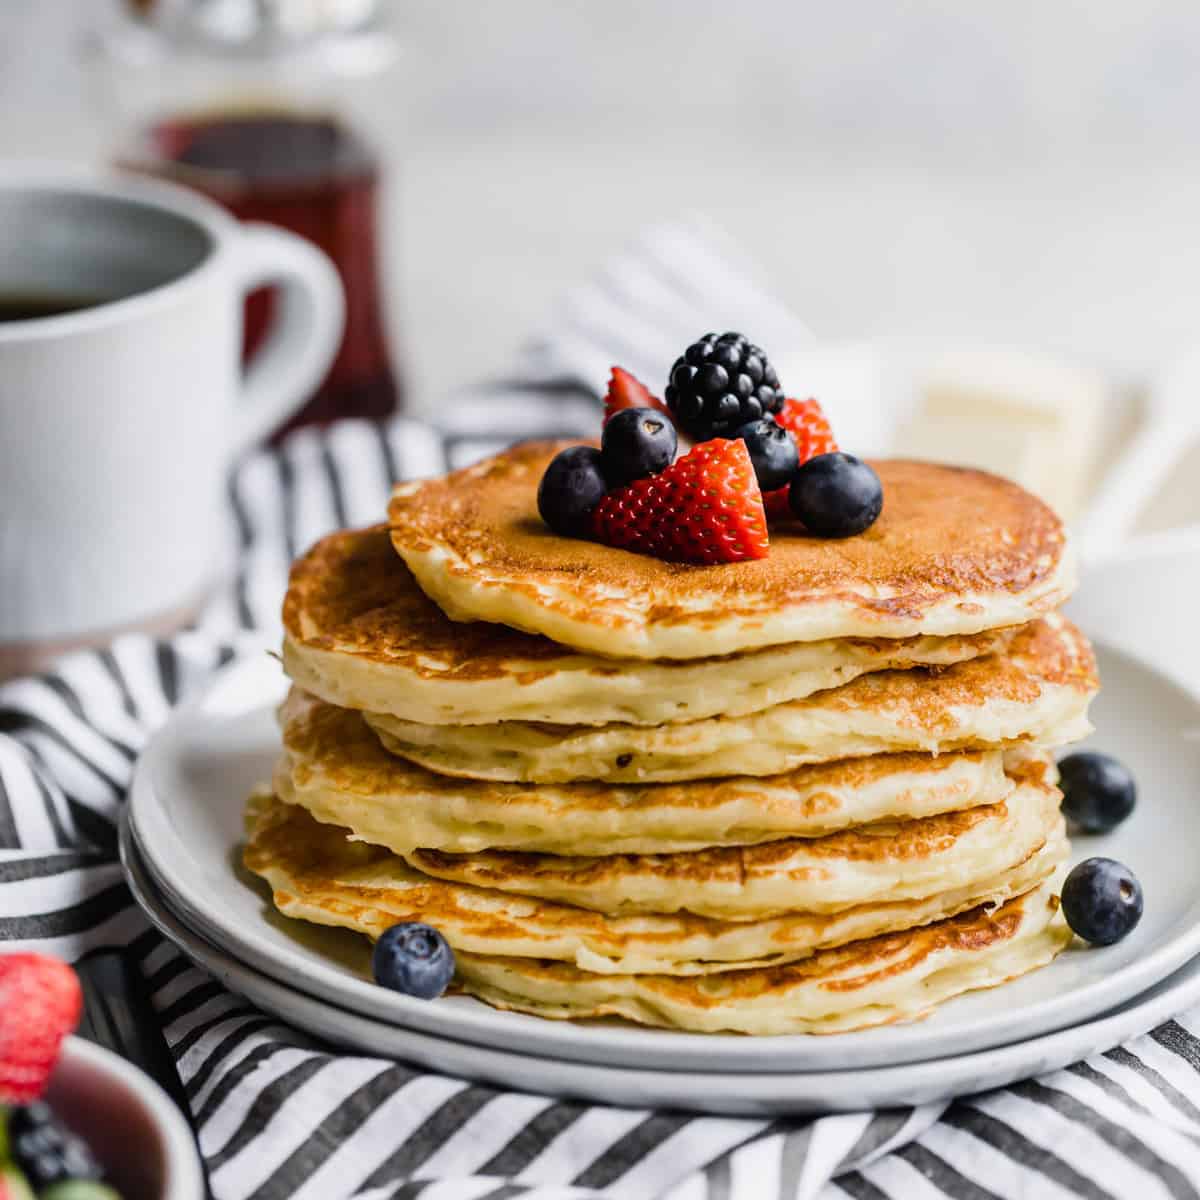 https://www.browneyedbaker.com/wp-content/uploads/2021/06/buttermilk-pancakes-8-square.jpg